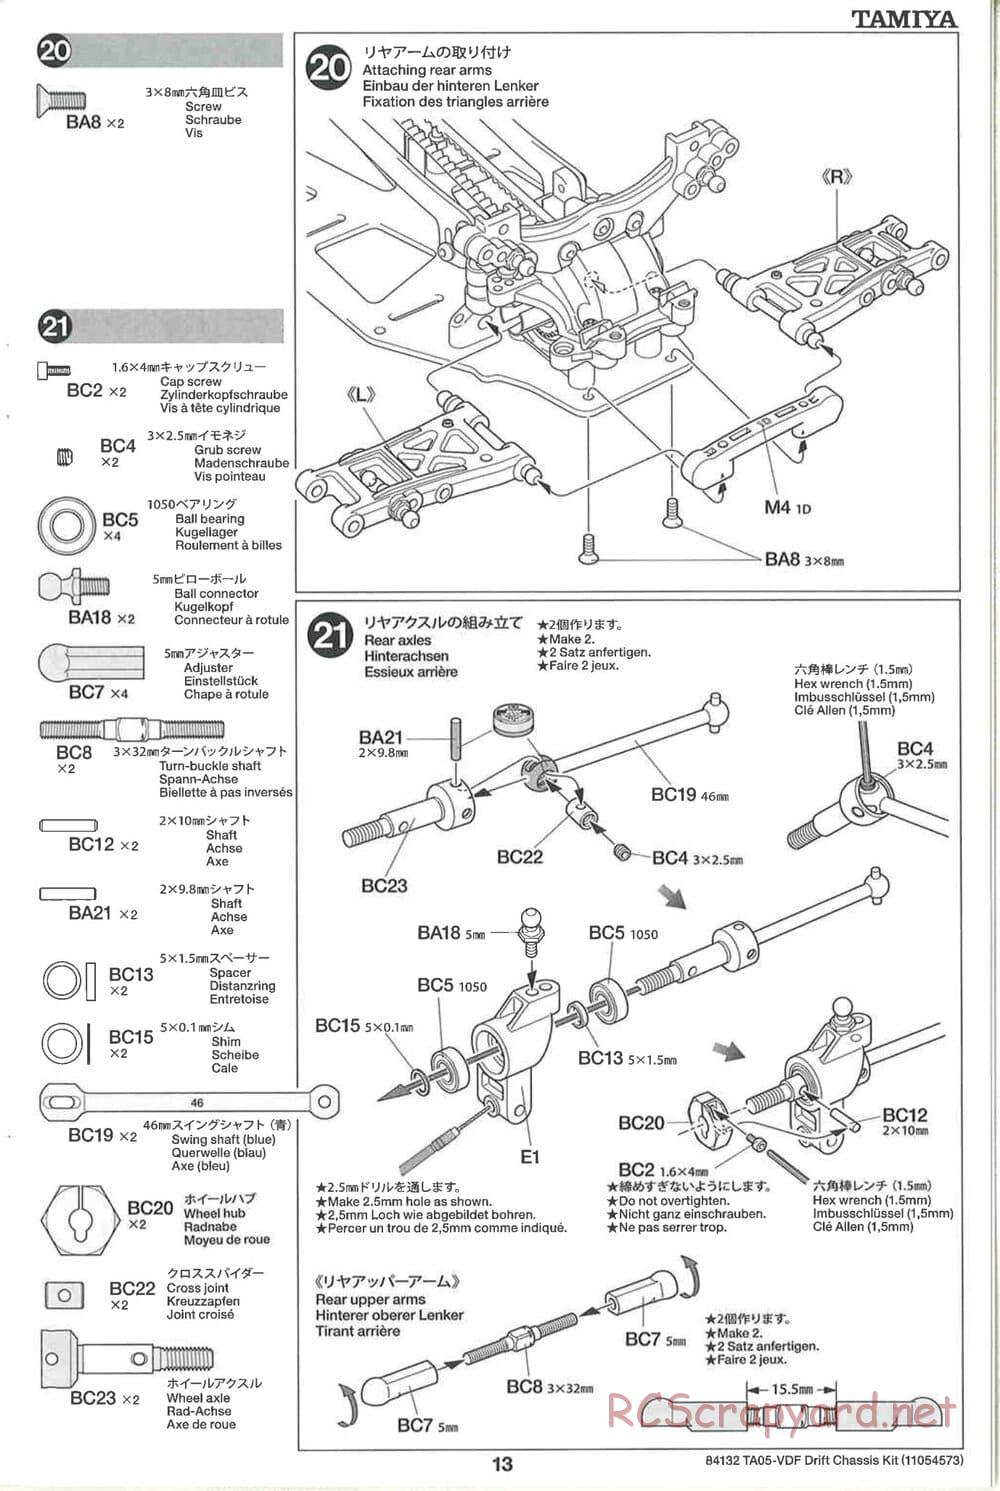 Tamiya - TA05-VDF Drift Spec Chassis - Manual - Page 13